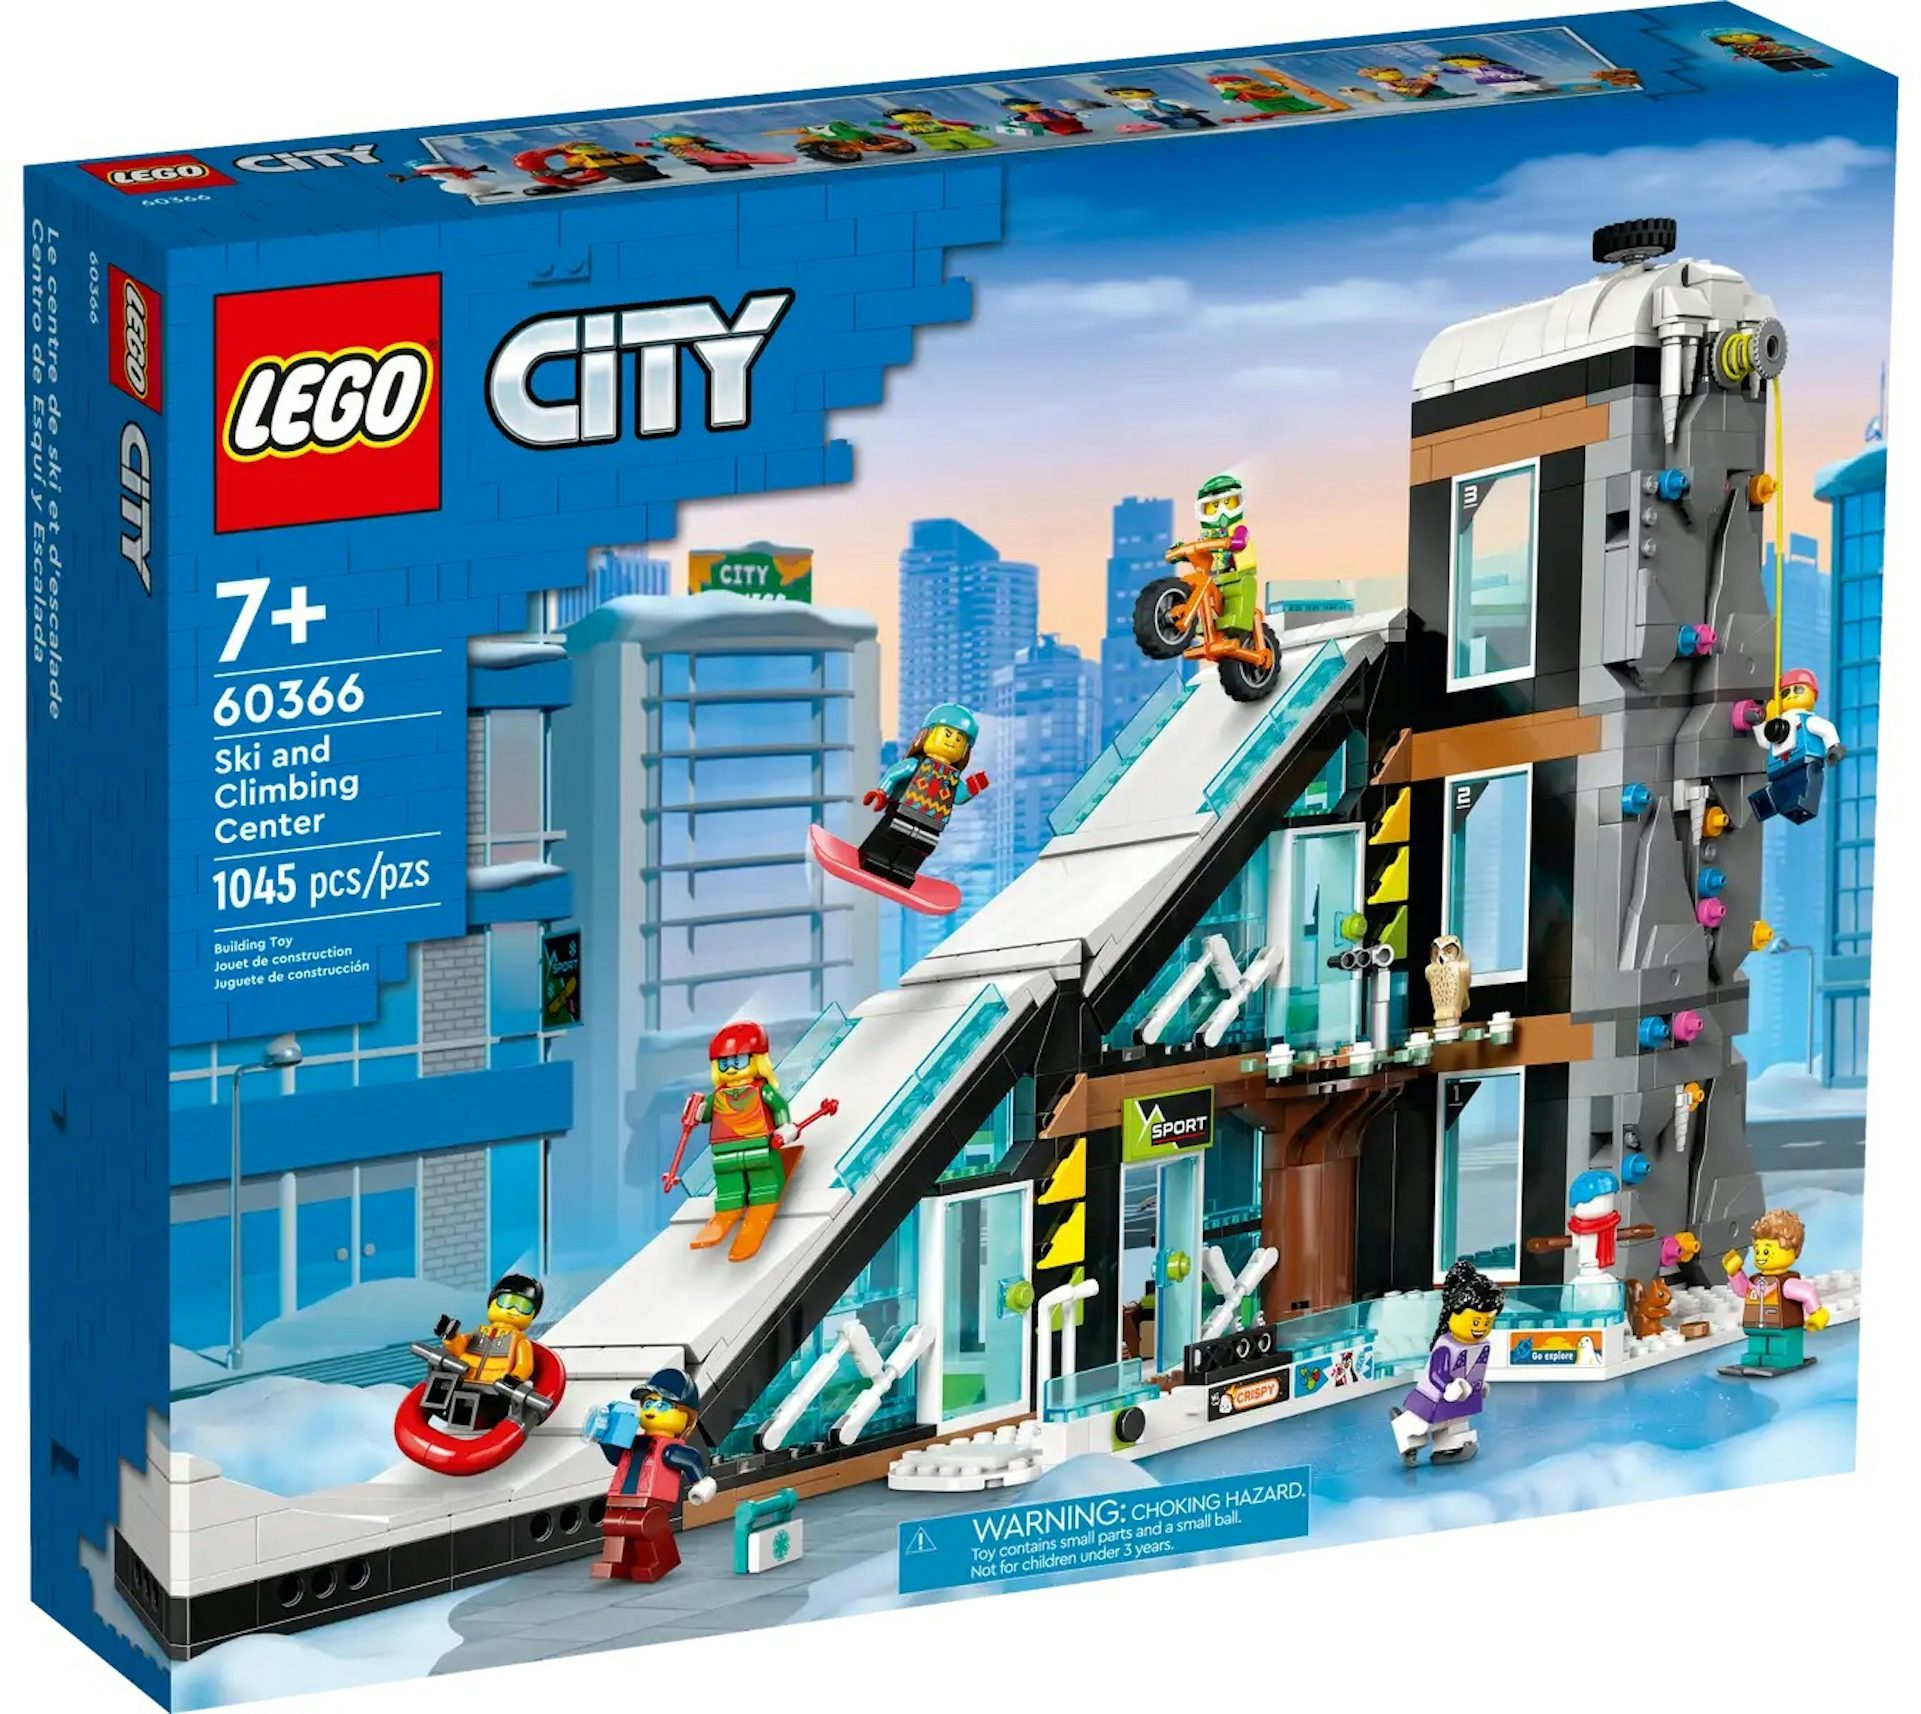 LEGO City Ski and Climbing Center Set 60366 - US